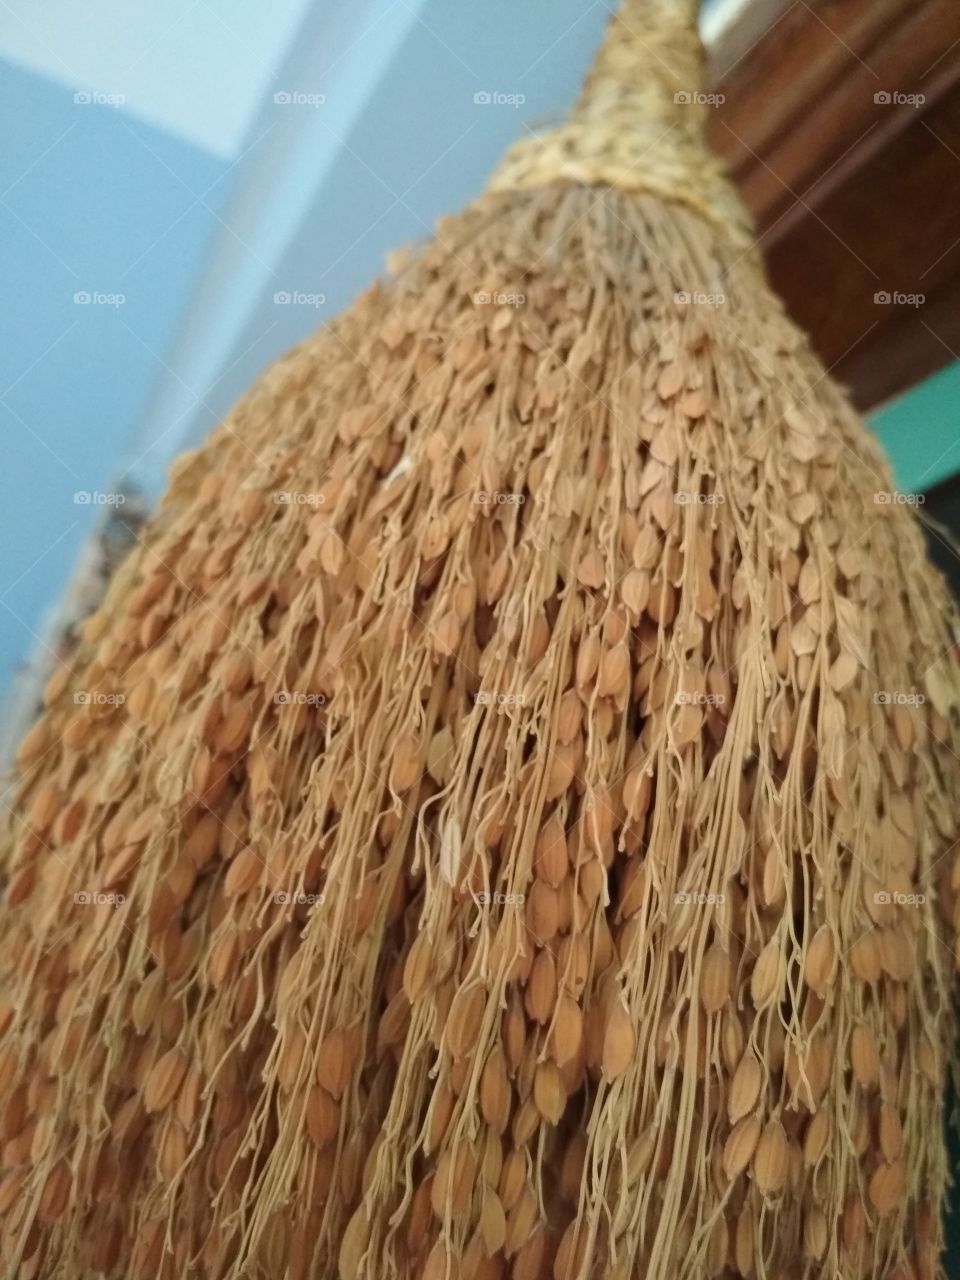 Original Rice Paddy